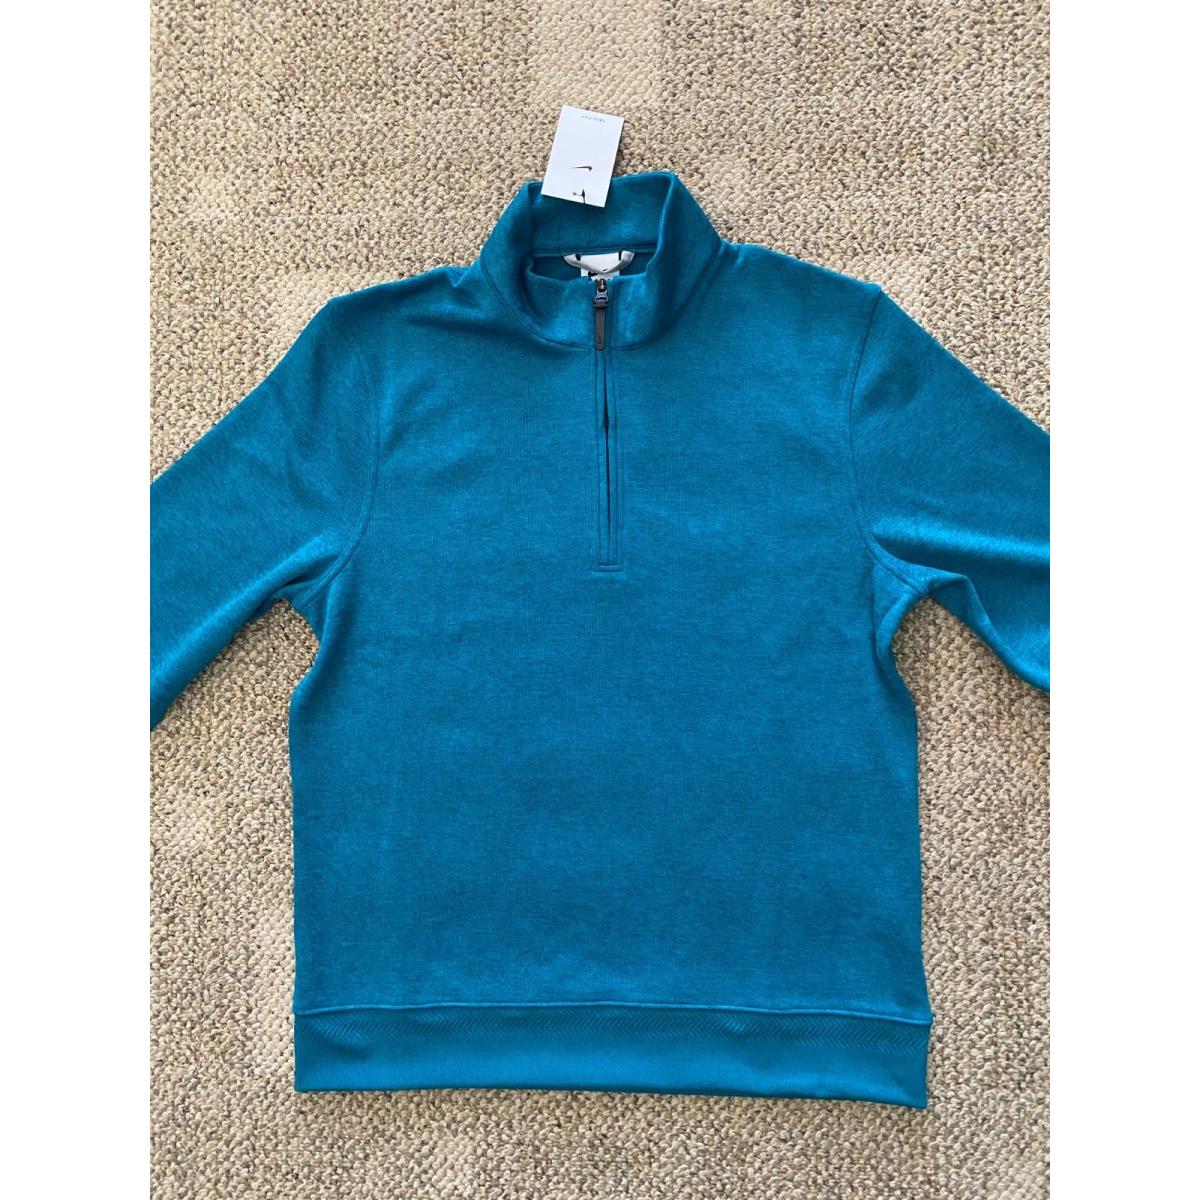 Men`s Size XL Nike Dri-fit 1/2 Zip Pullover Golf Top Shirt Teal Green DH0986-367